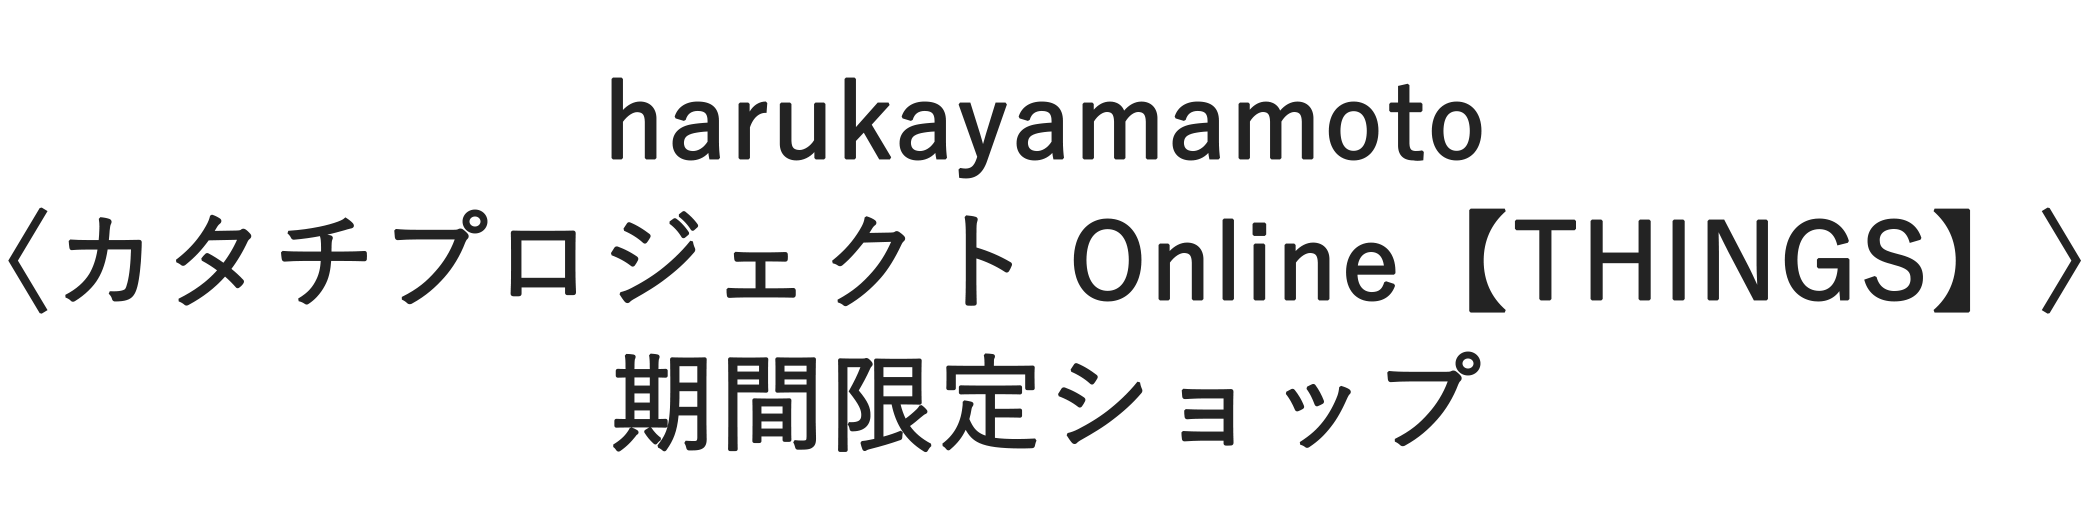 harukayamamoto〈カタチプロジェクト Online【THINGS】〉期間限定ショップ